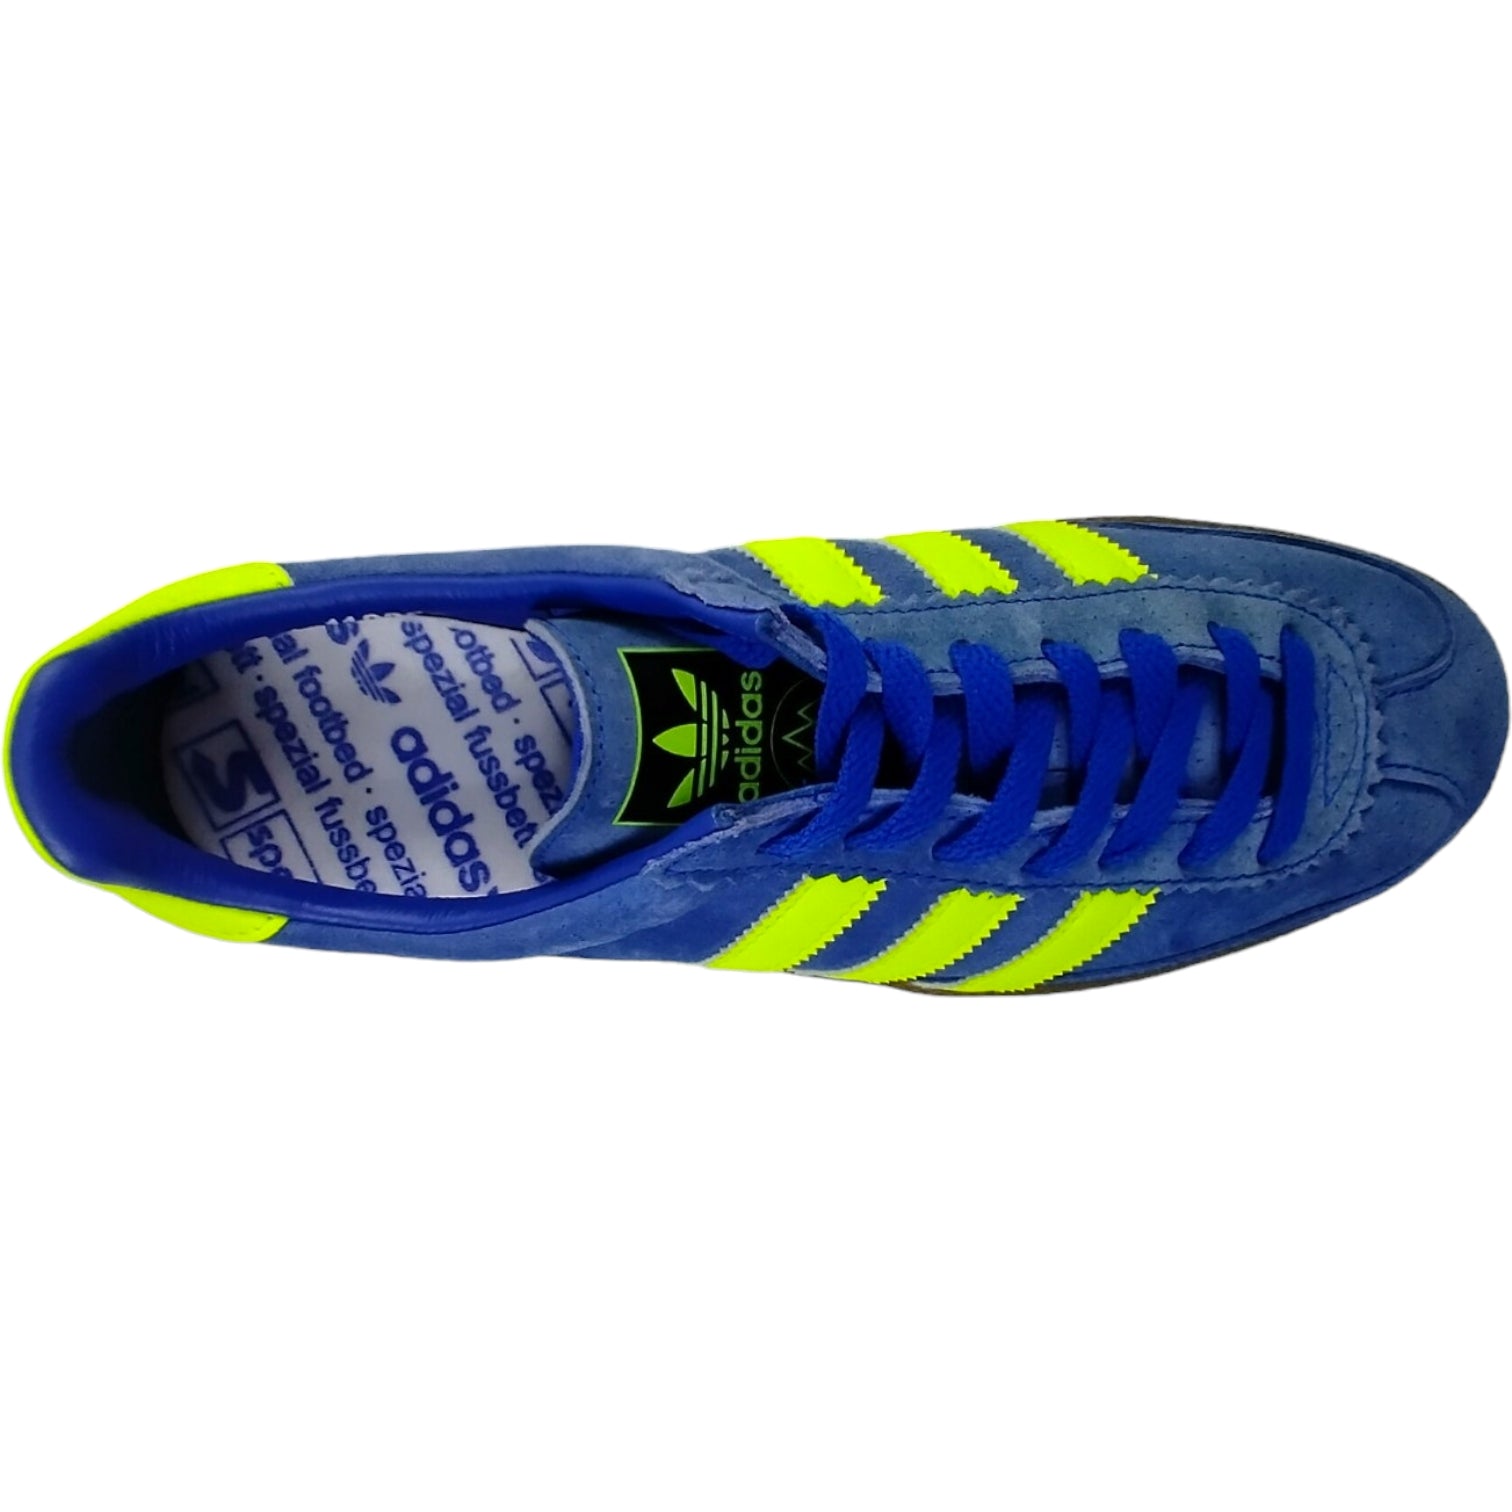 Adidas Blue/Neon SPZL Walley Trainer